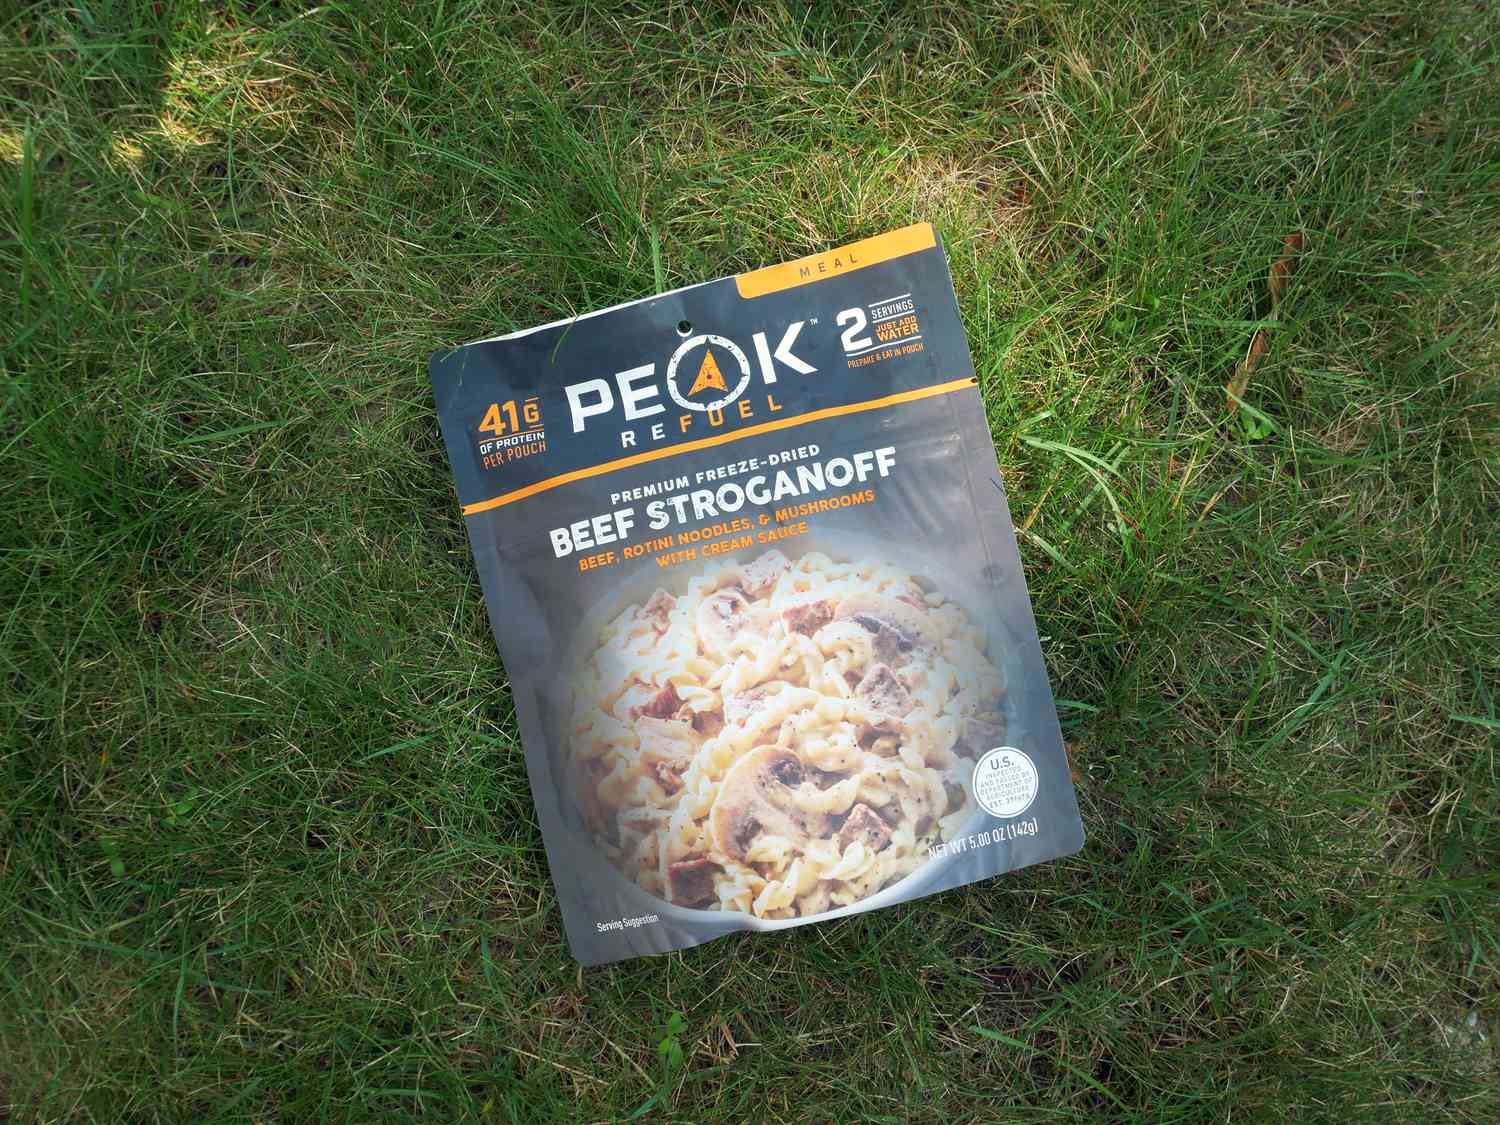 Peak refuel beef stroganoff pouch on lawn